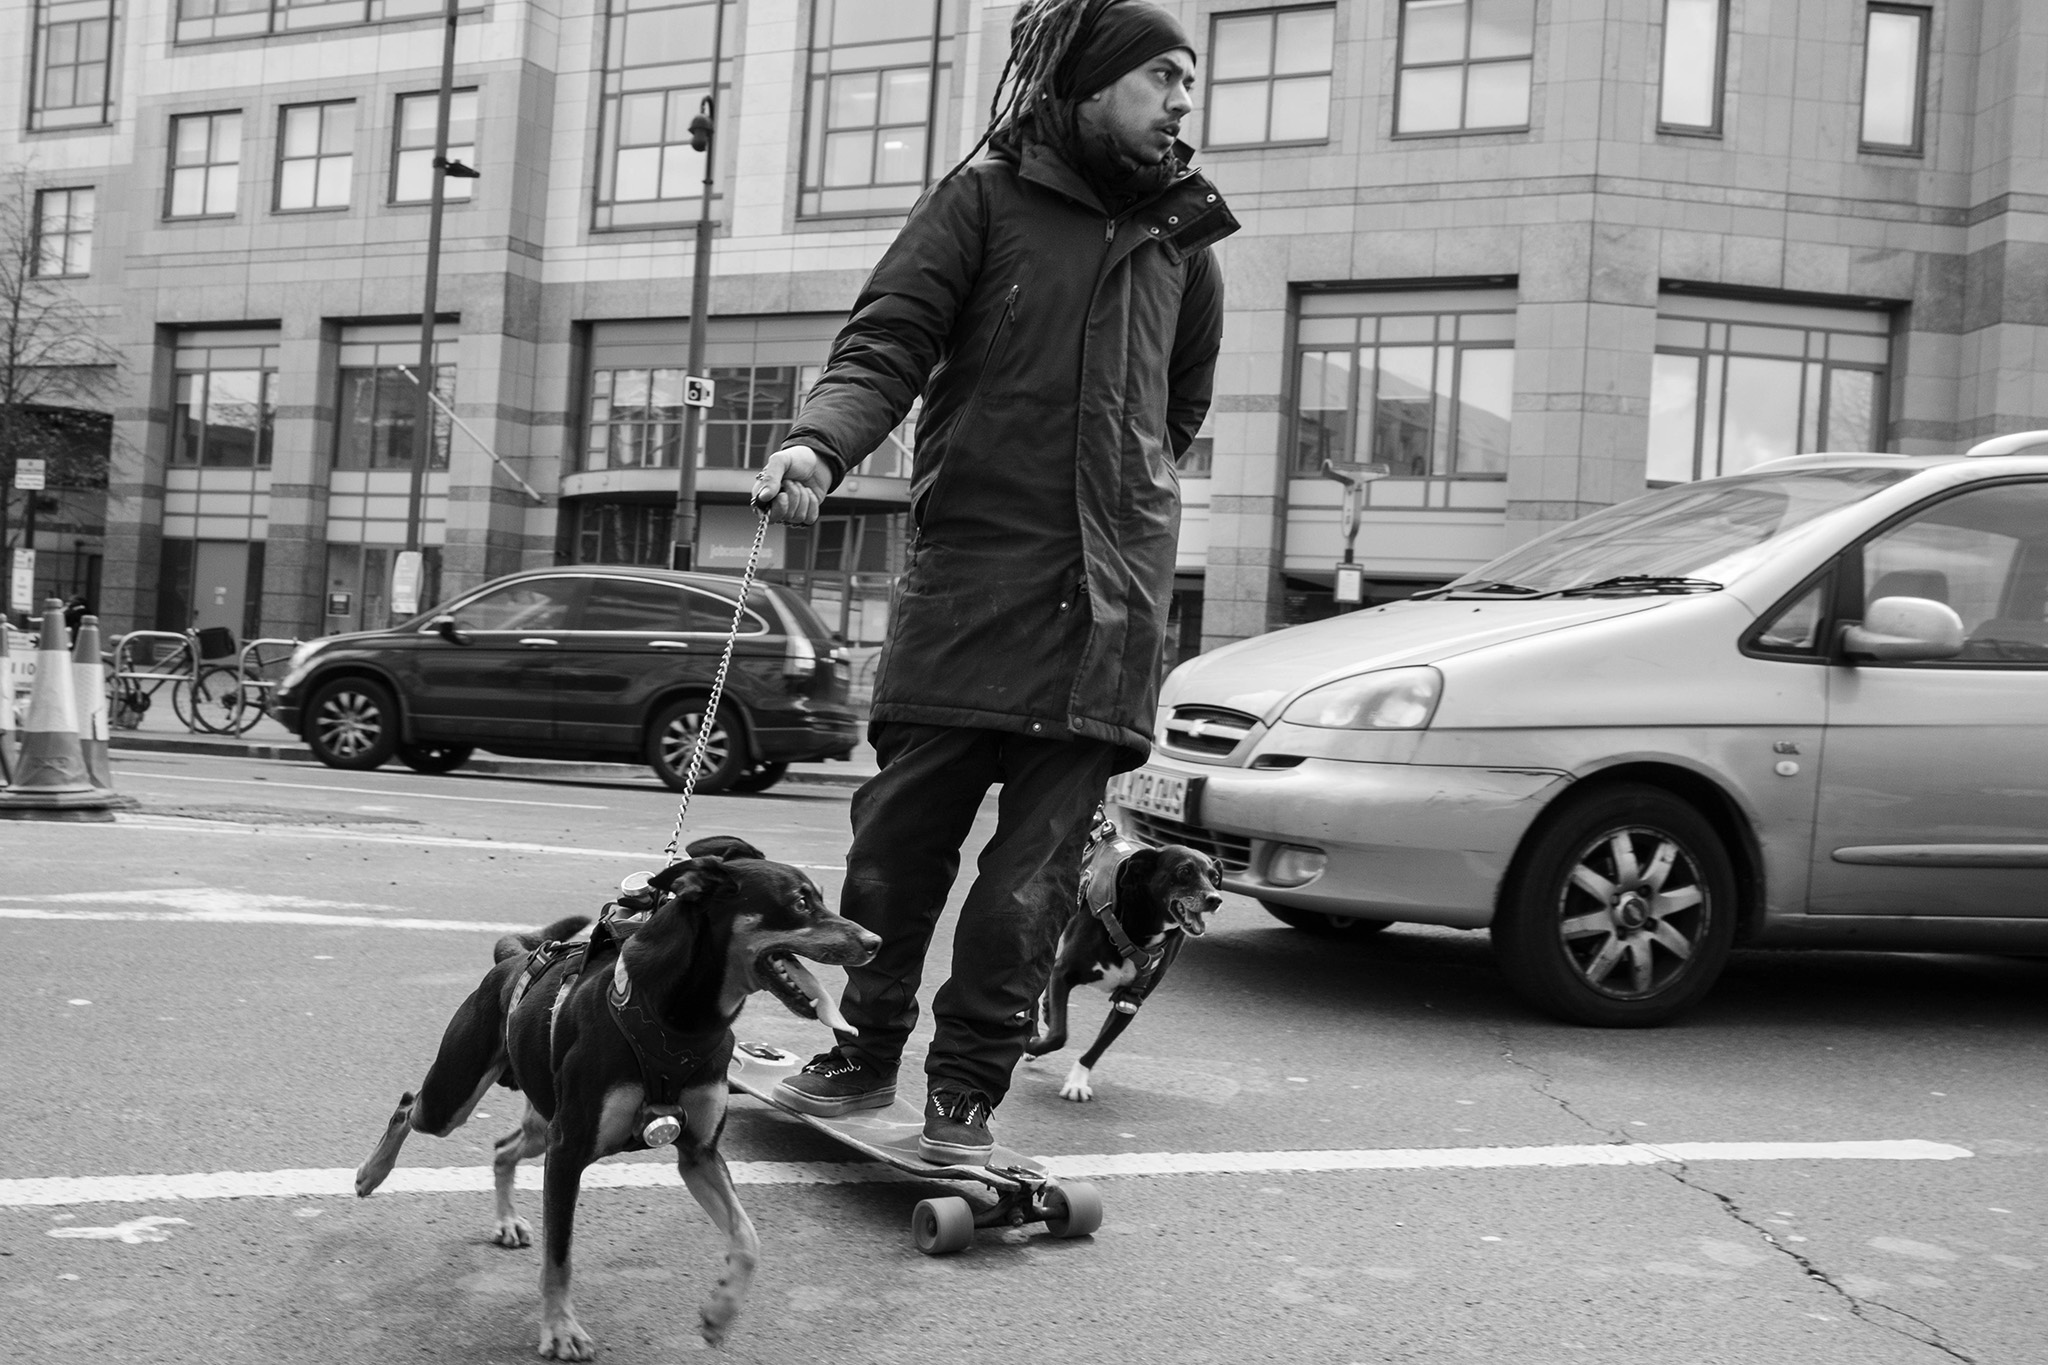 Geez_Hammersmith_arjun_skate_dogs_02_2048